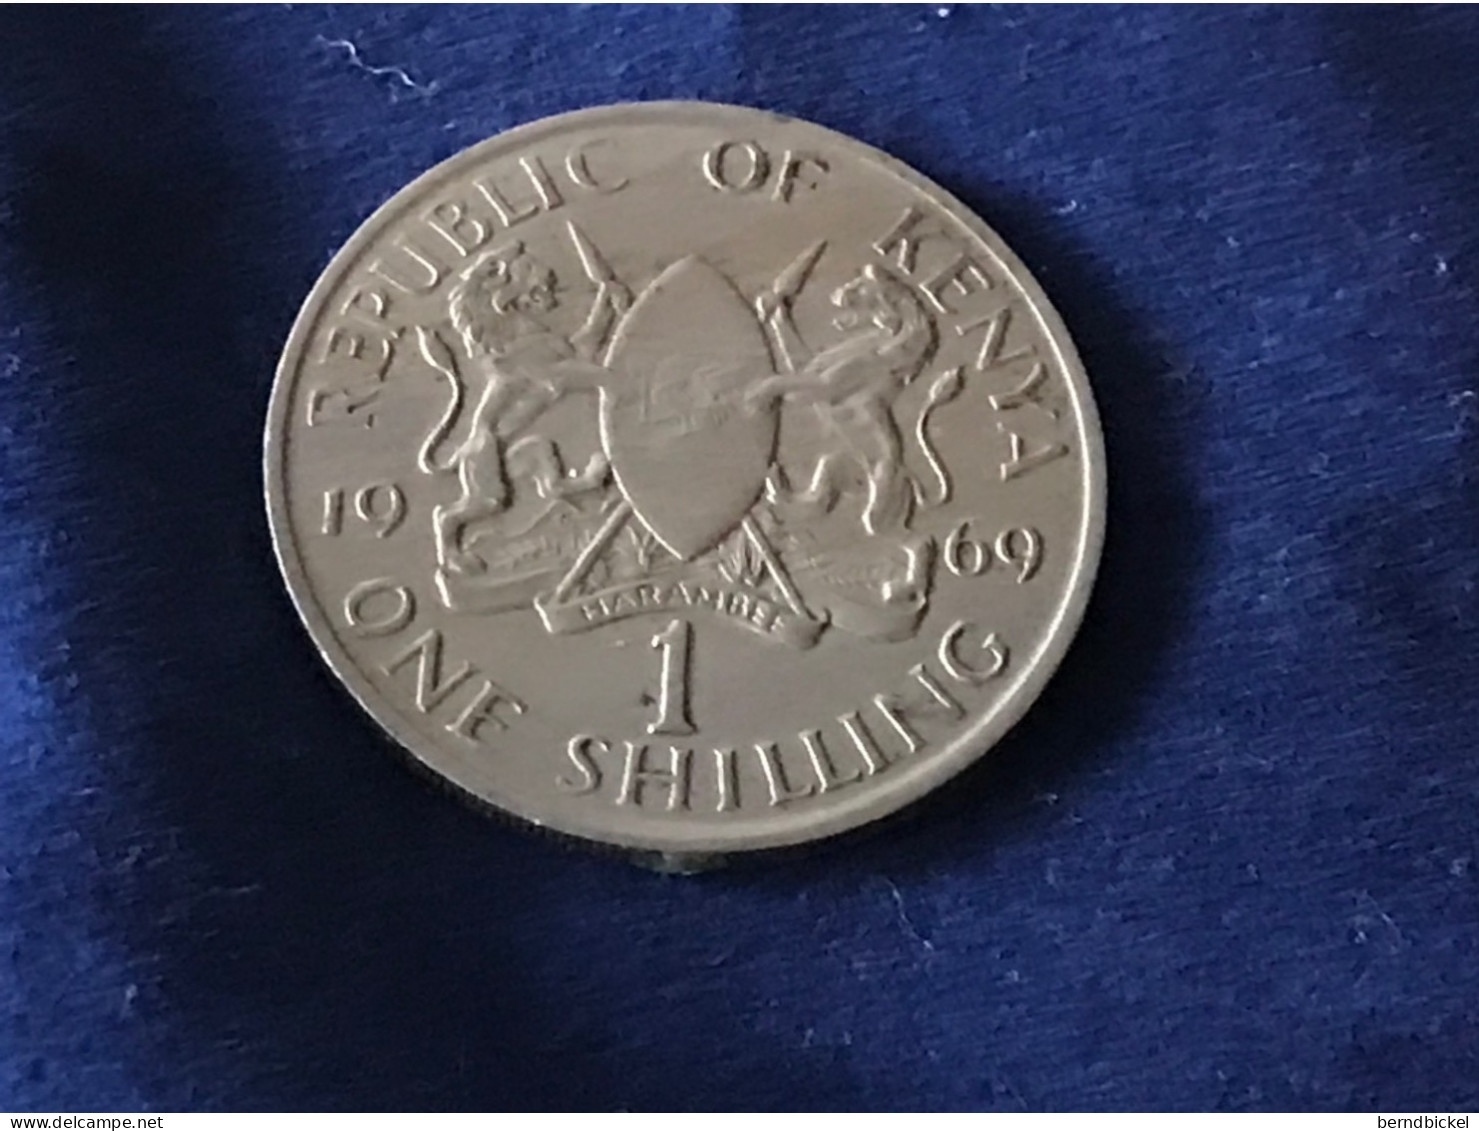 Münze Münzen Umlaufmünze Kenia 1 Shilling 1969 - Kenia